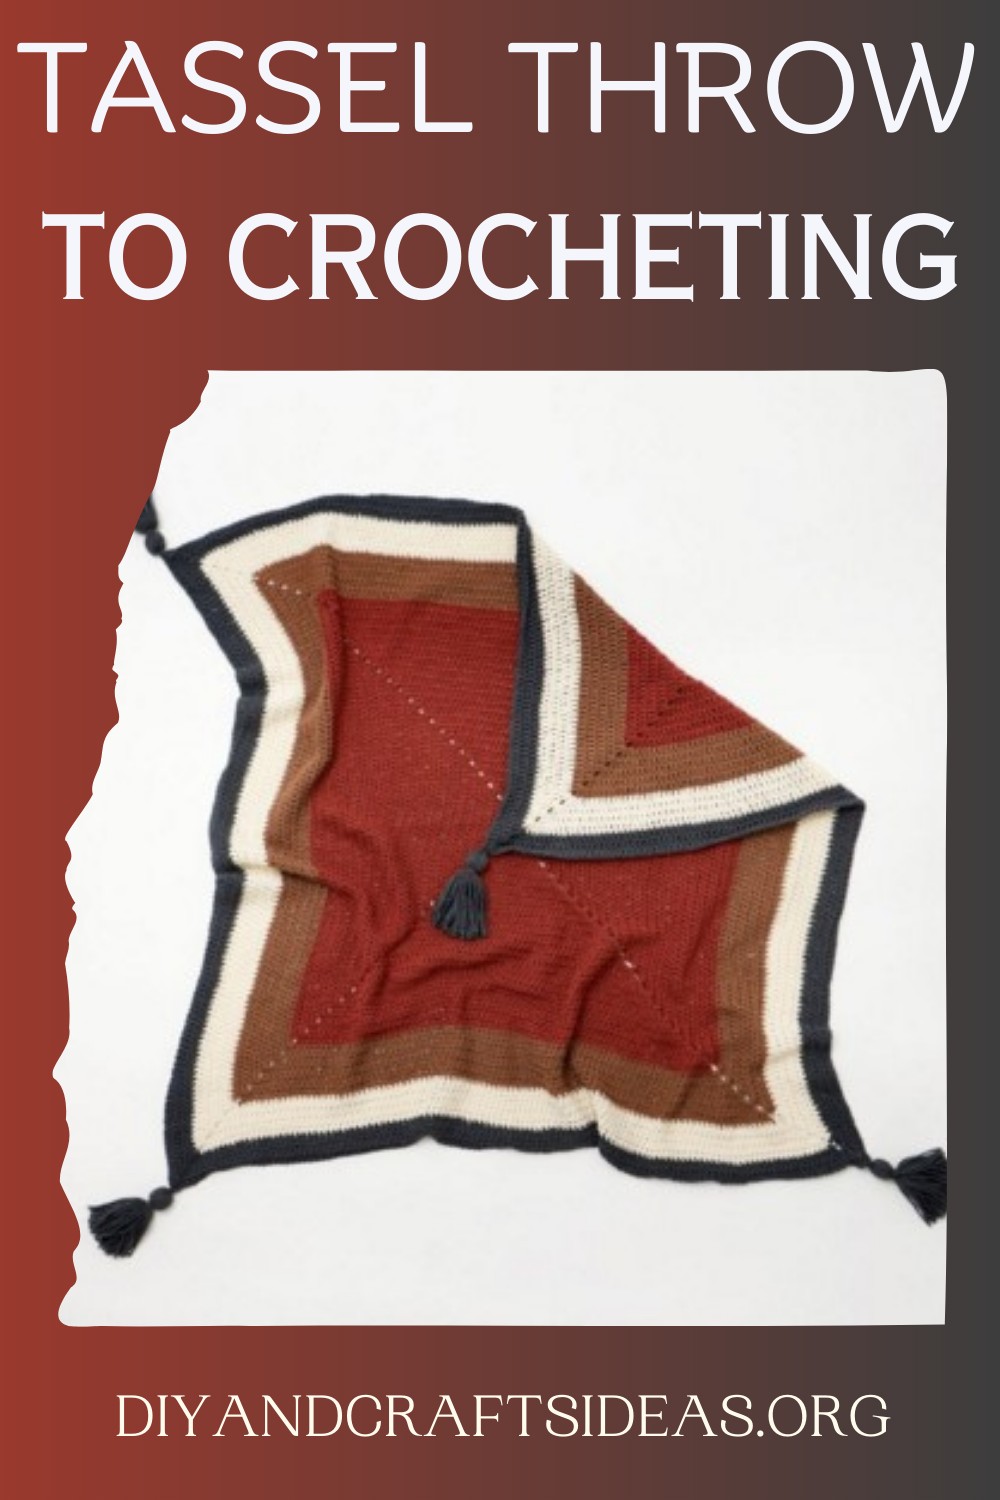 Windsor Tassel Throw To Crocheting